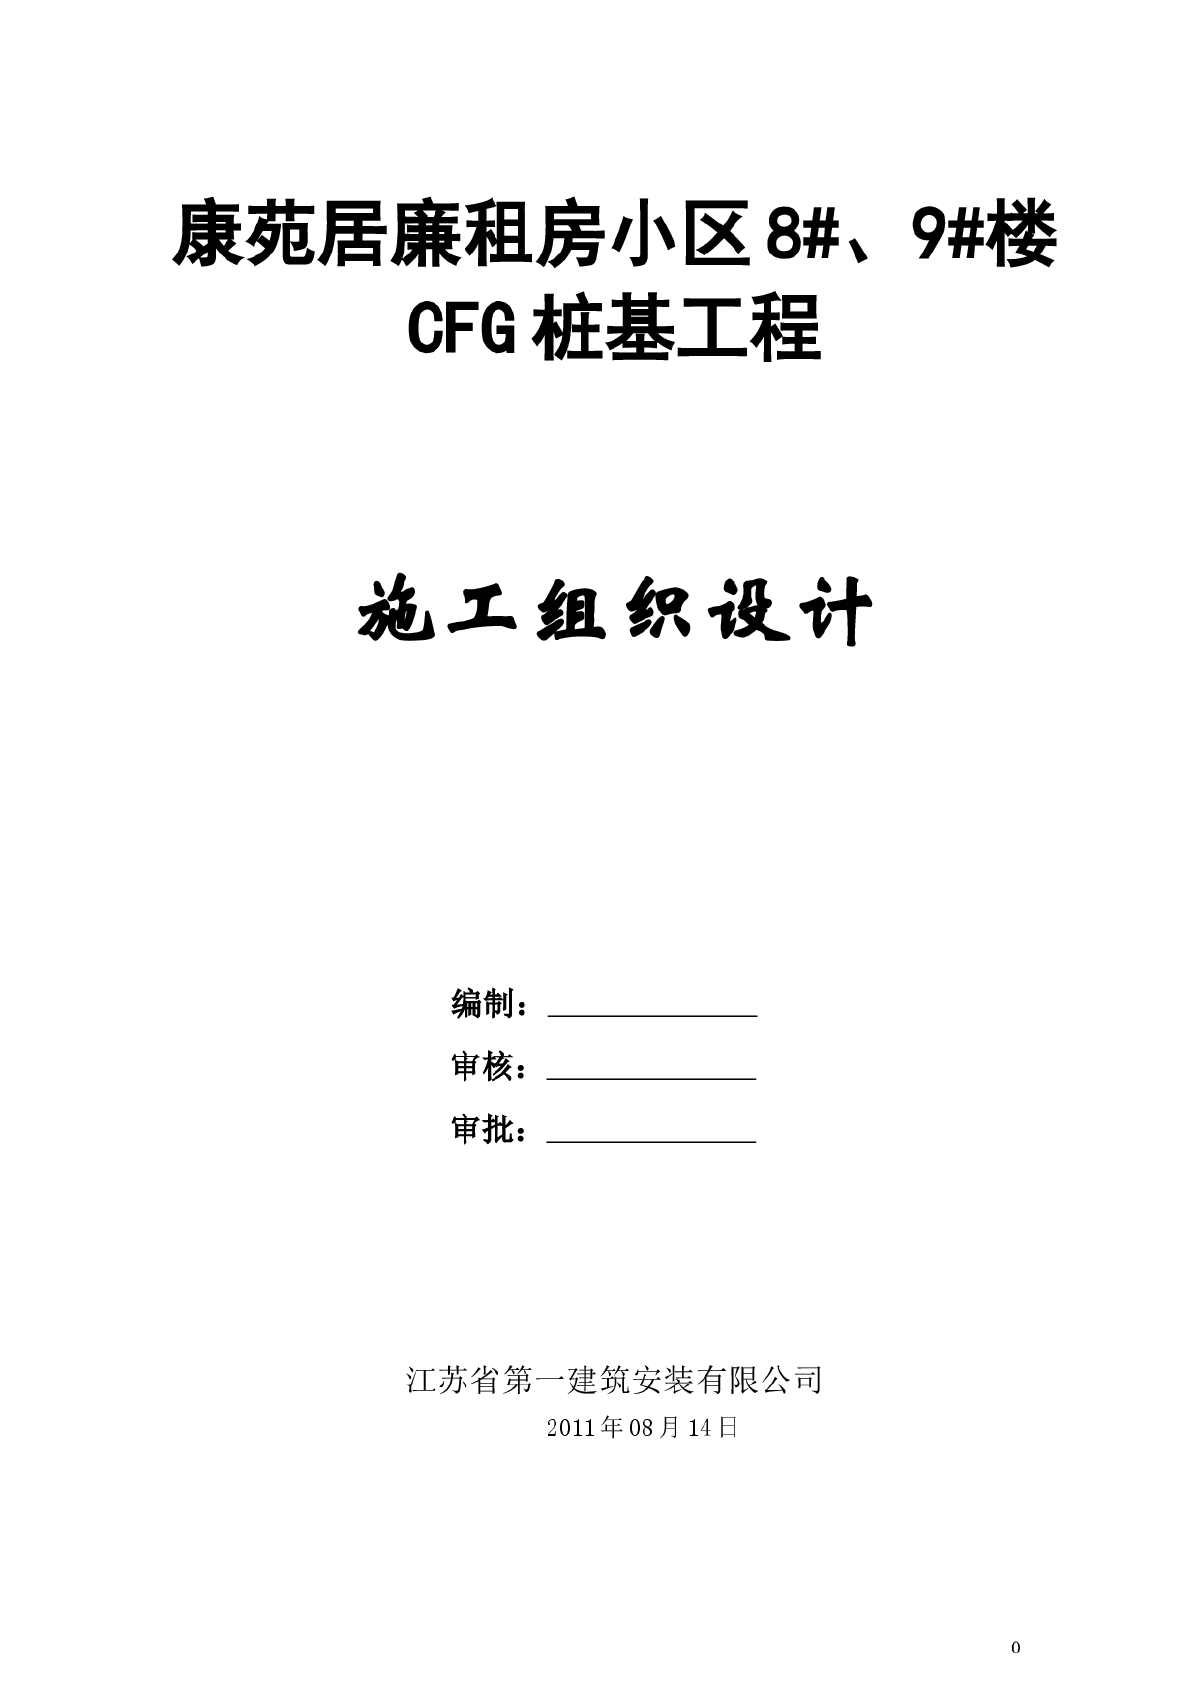 CFG桩基工程施工组织设计